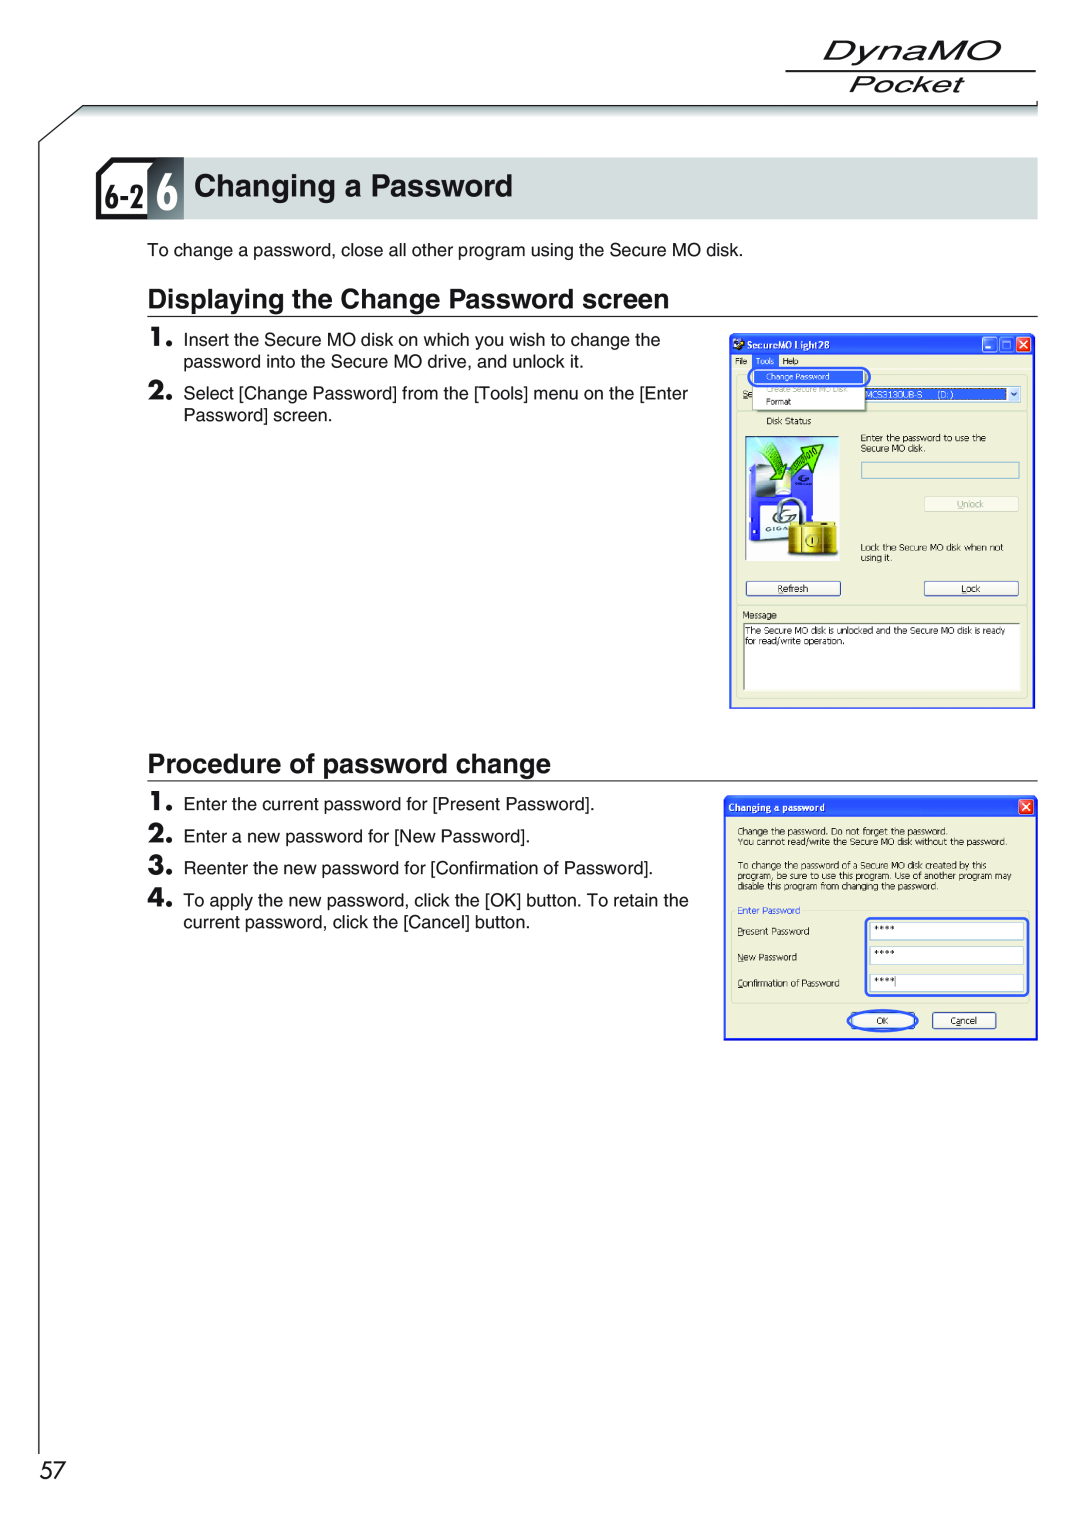 Fujitsu 1300U2 user manual 6-2 6 Changing a Password, Displaying the Change Password screen, Procedure of password change 